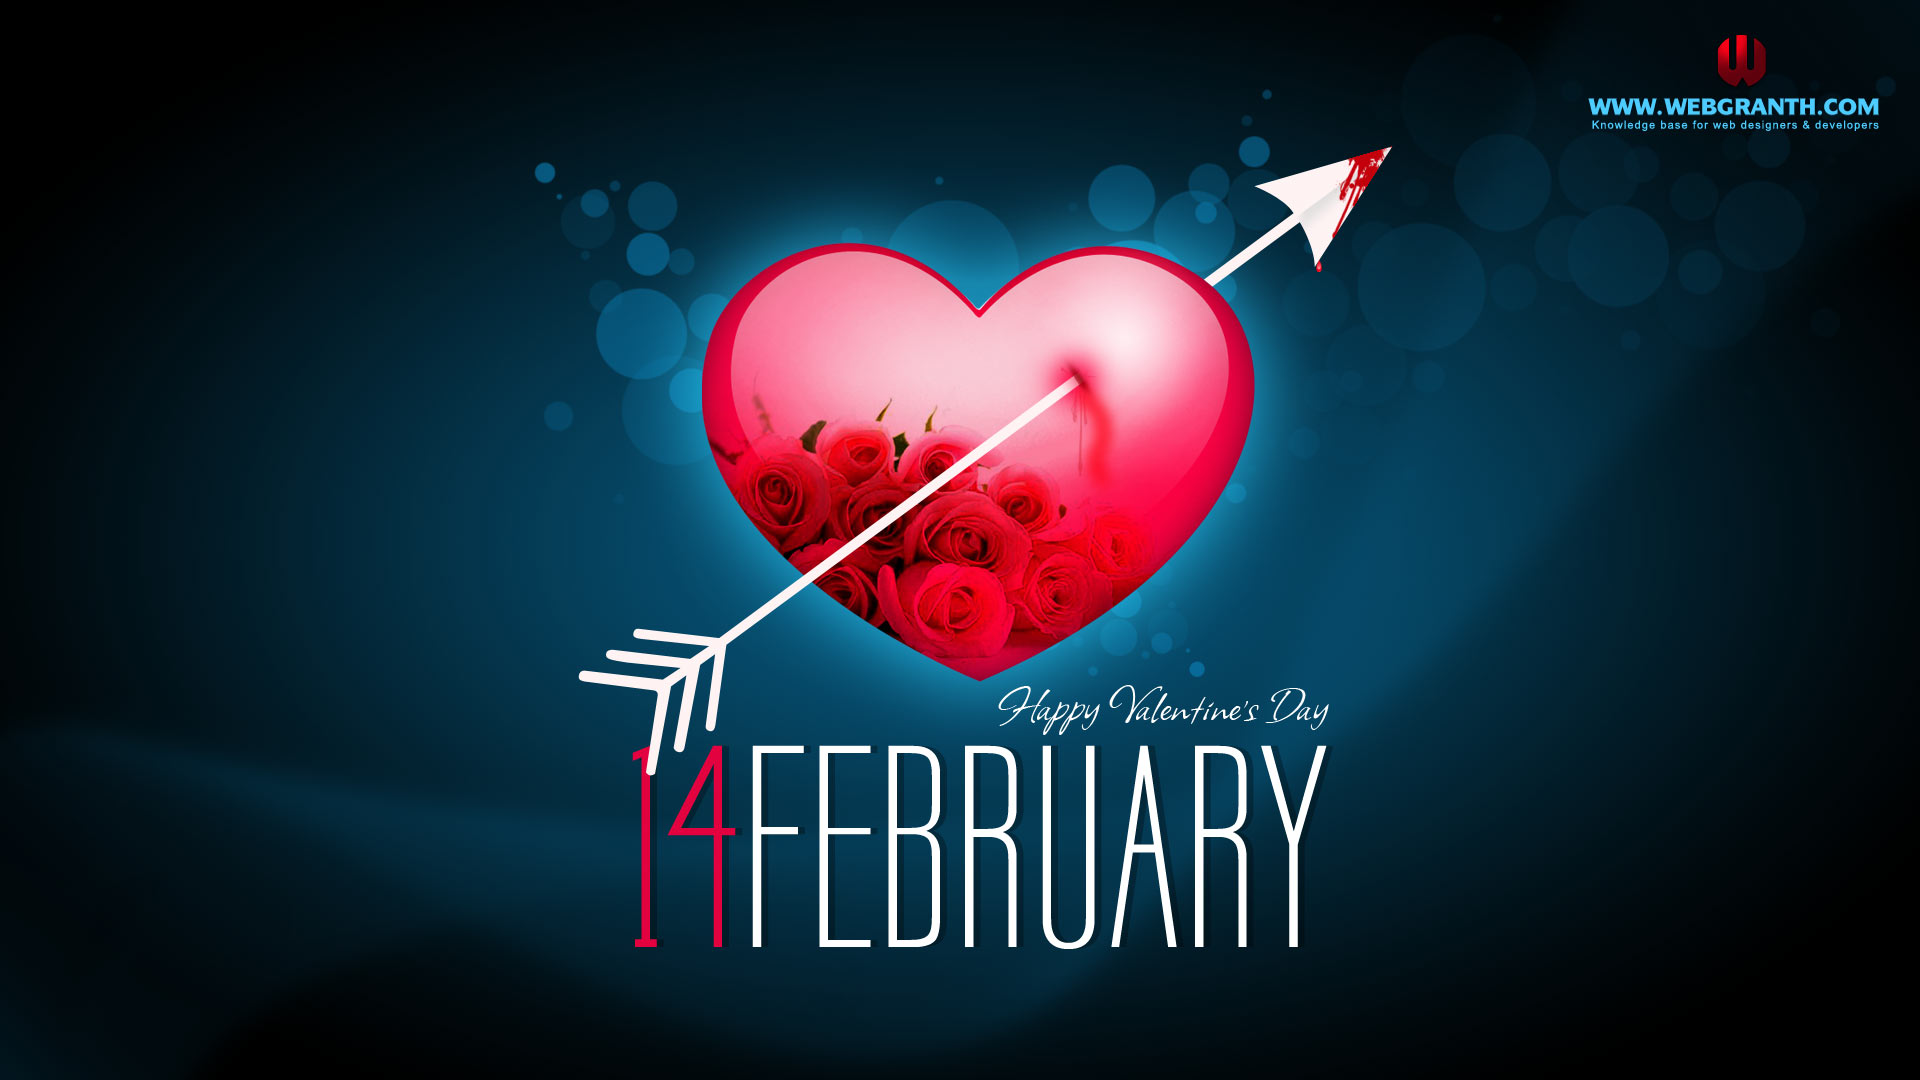 i love you divya wallpaper,heart,valentine's day,text,love,graphic design